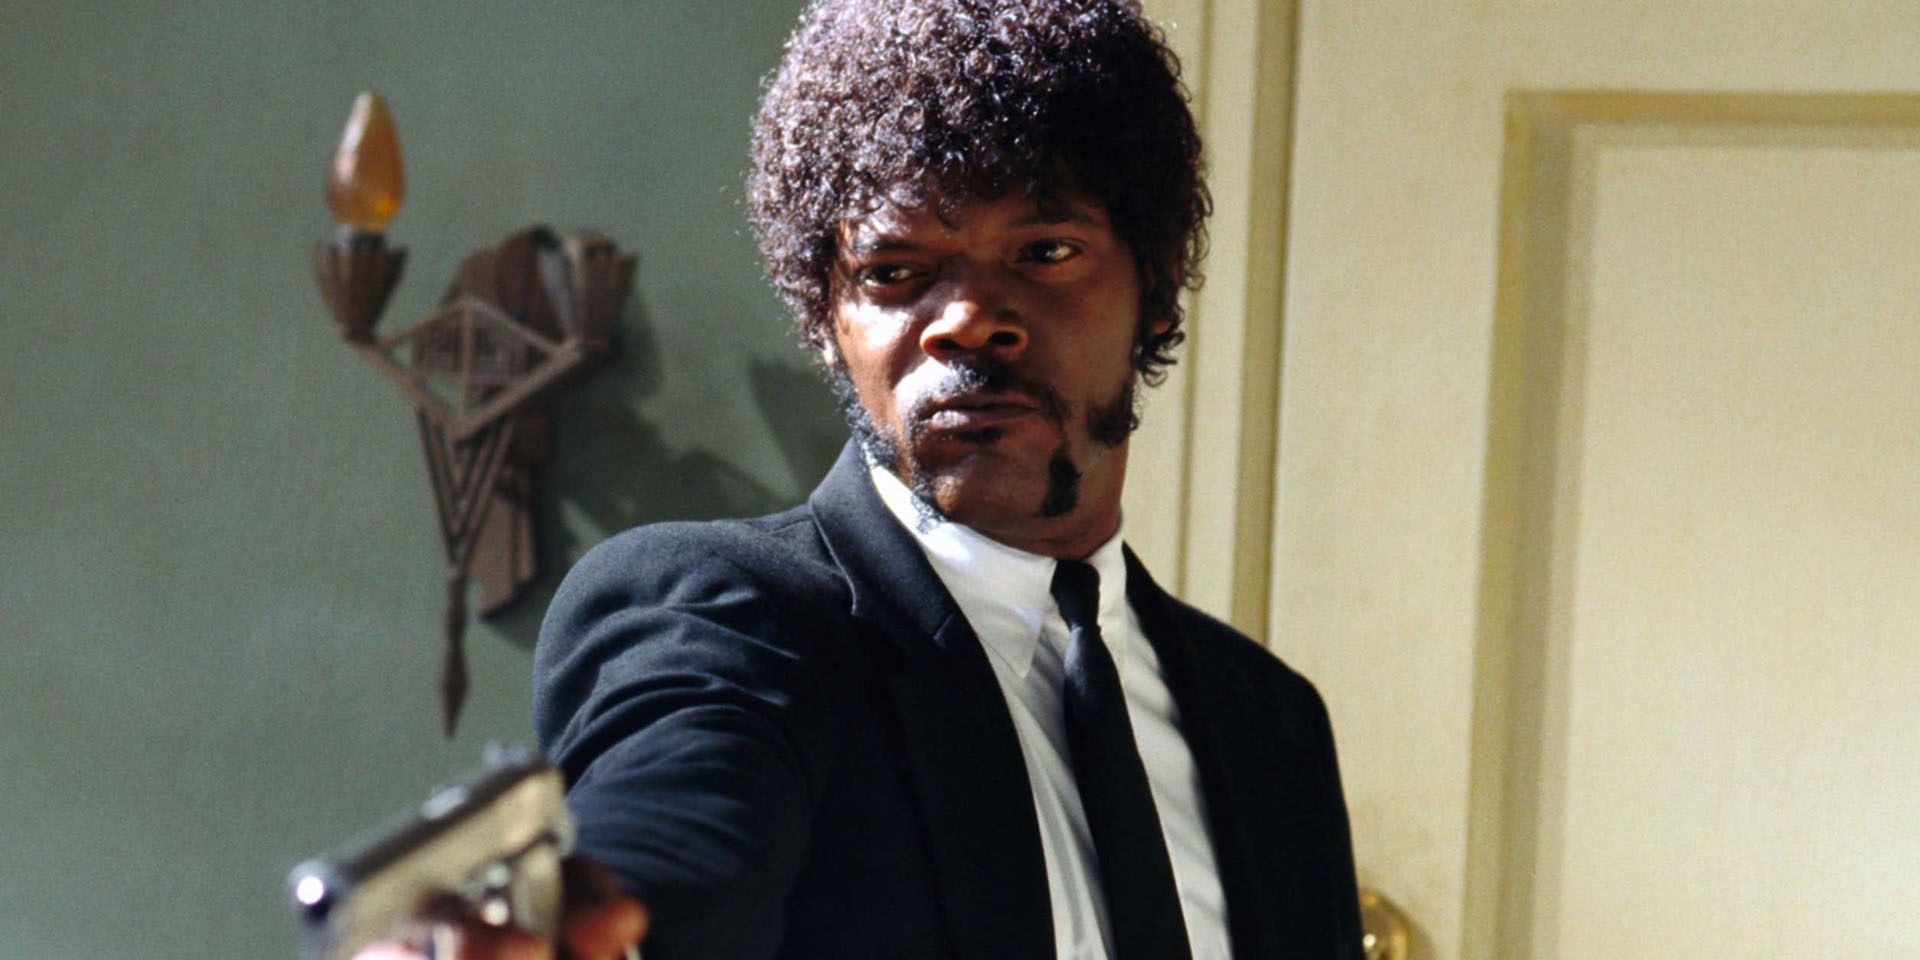 Samuel L Jackson as Jules holding a gun in Pulp Fiction